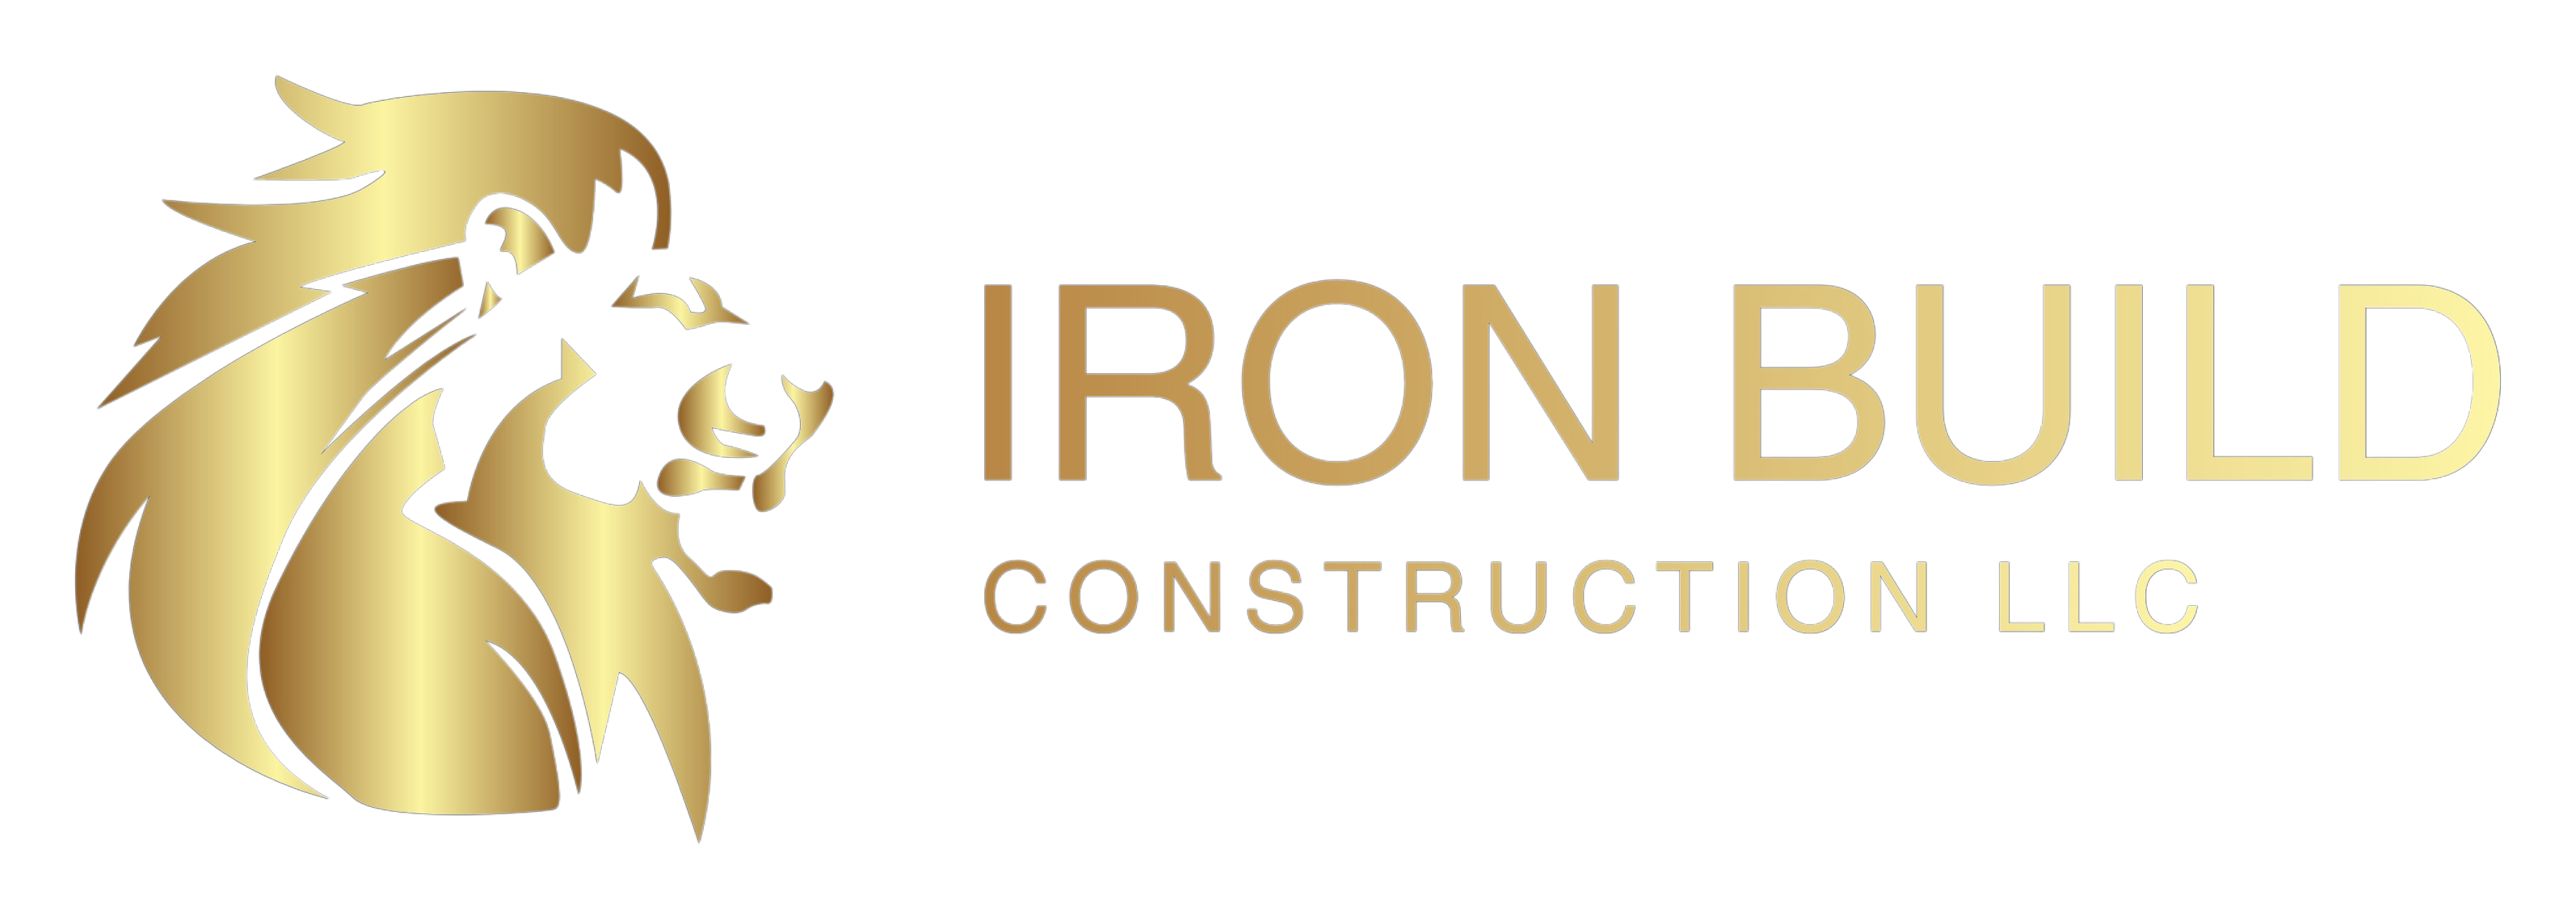 Iron Build Construction LLC